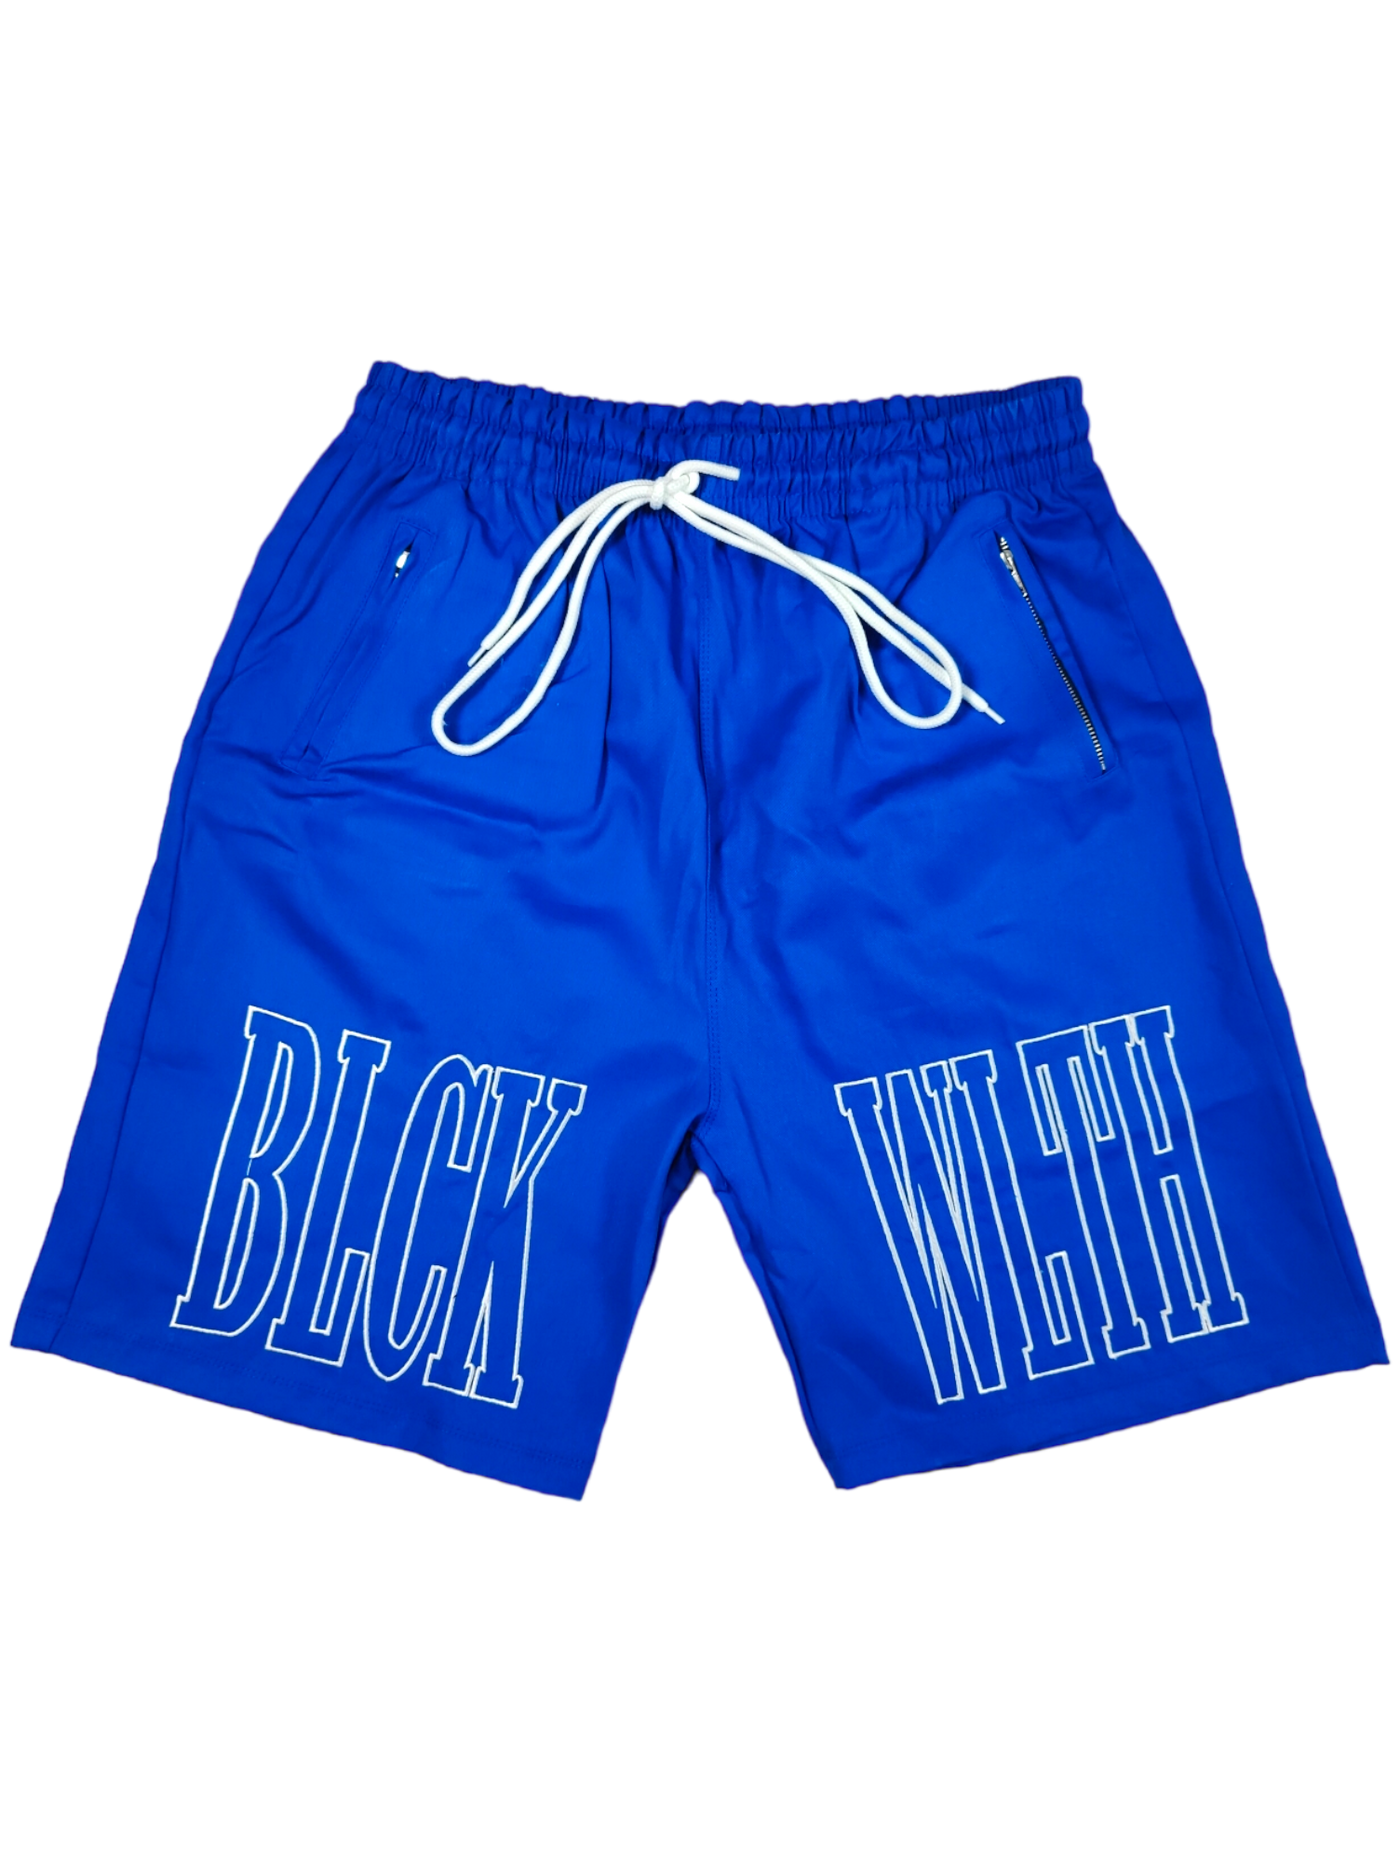 BLCK WLTH | Shorts (Azure)